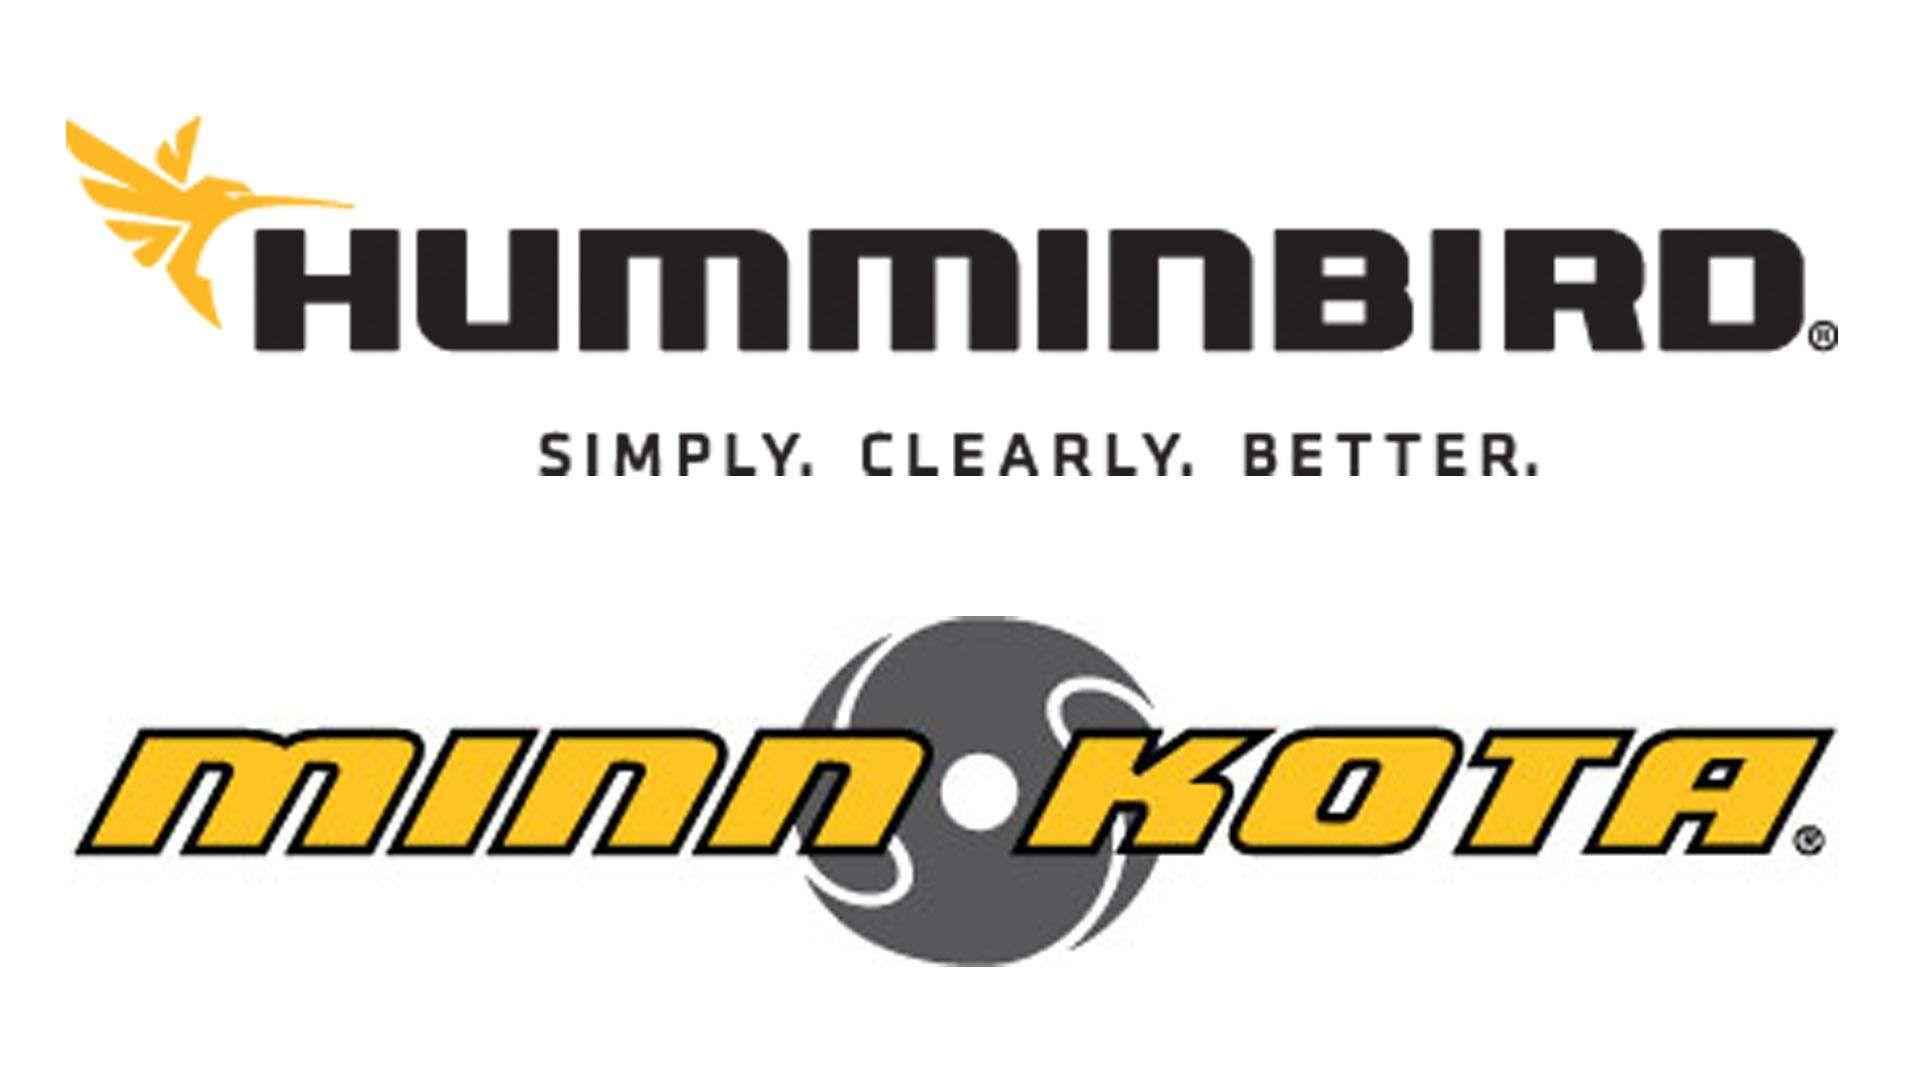 Humminbird Logo - Image result for humminbird logo